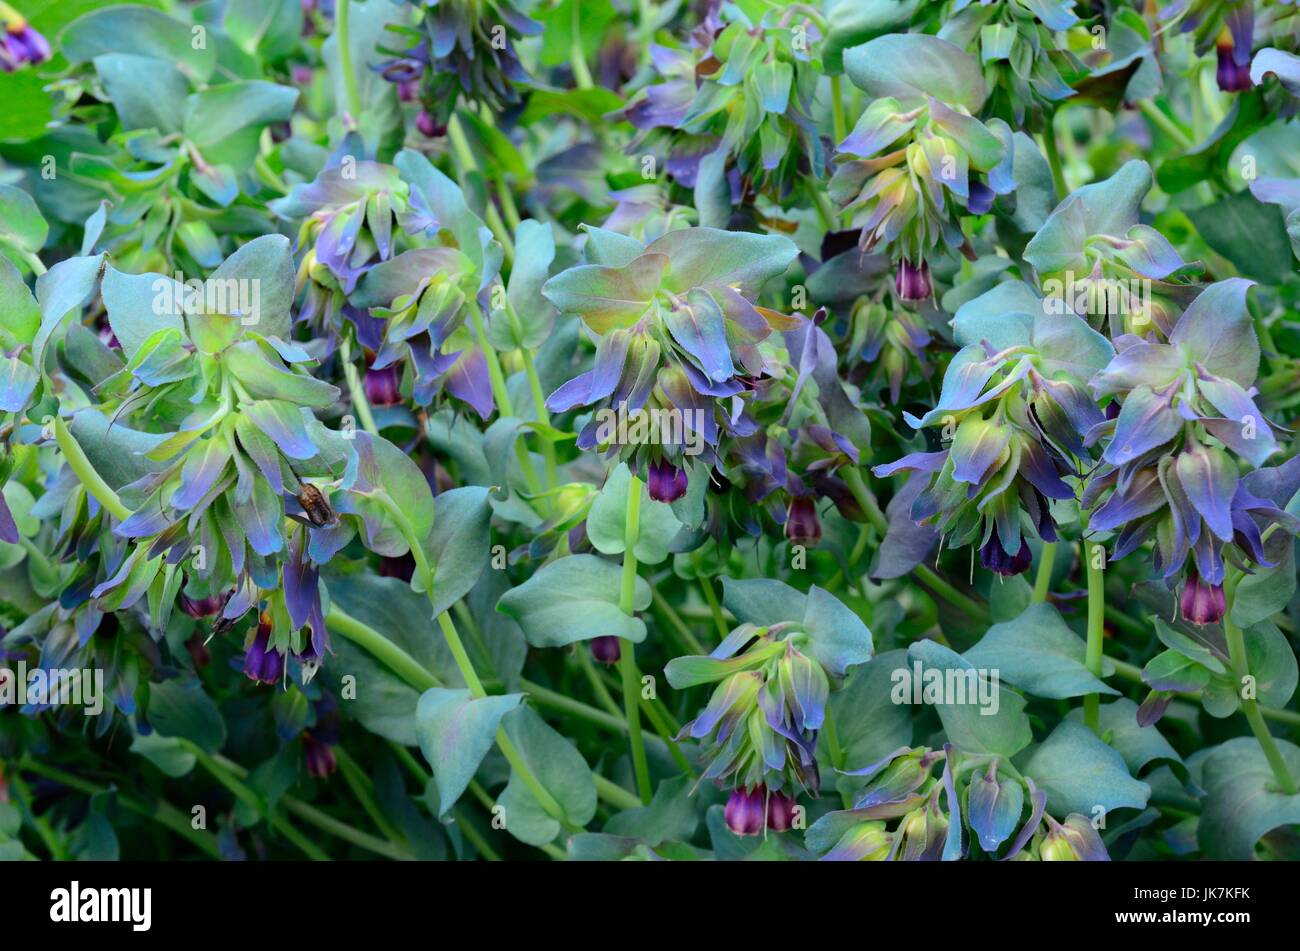 Cerinthe major Pururascens honeywort flowers Stock Photo